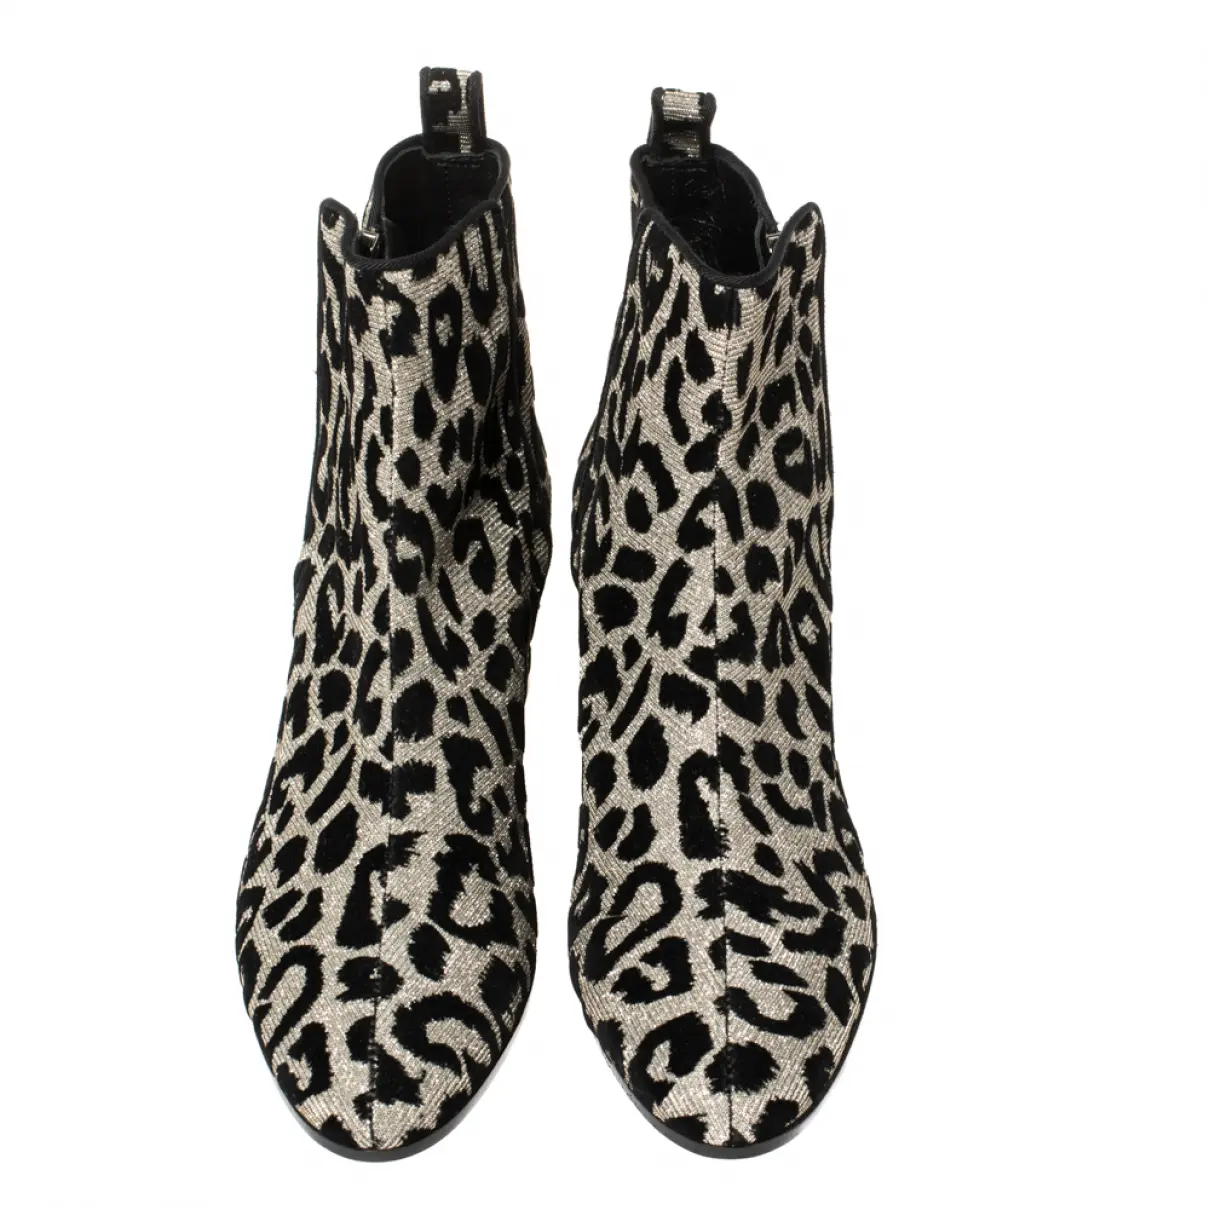 Luxury Dolce & Gabbana Boots Women